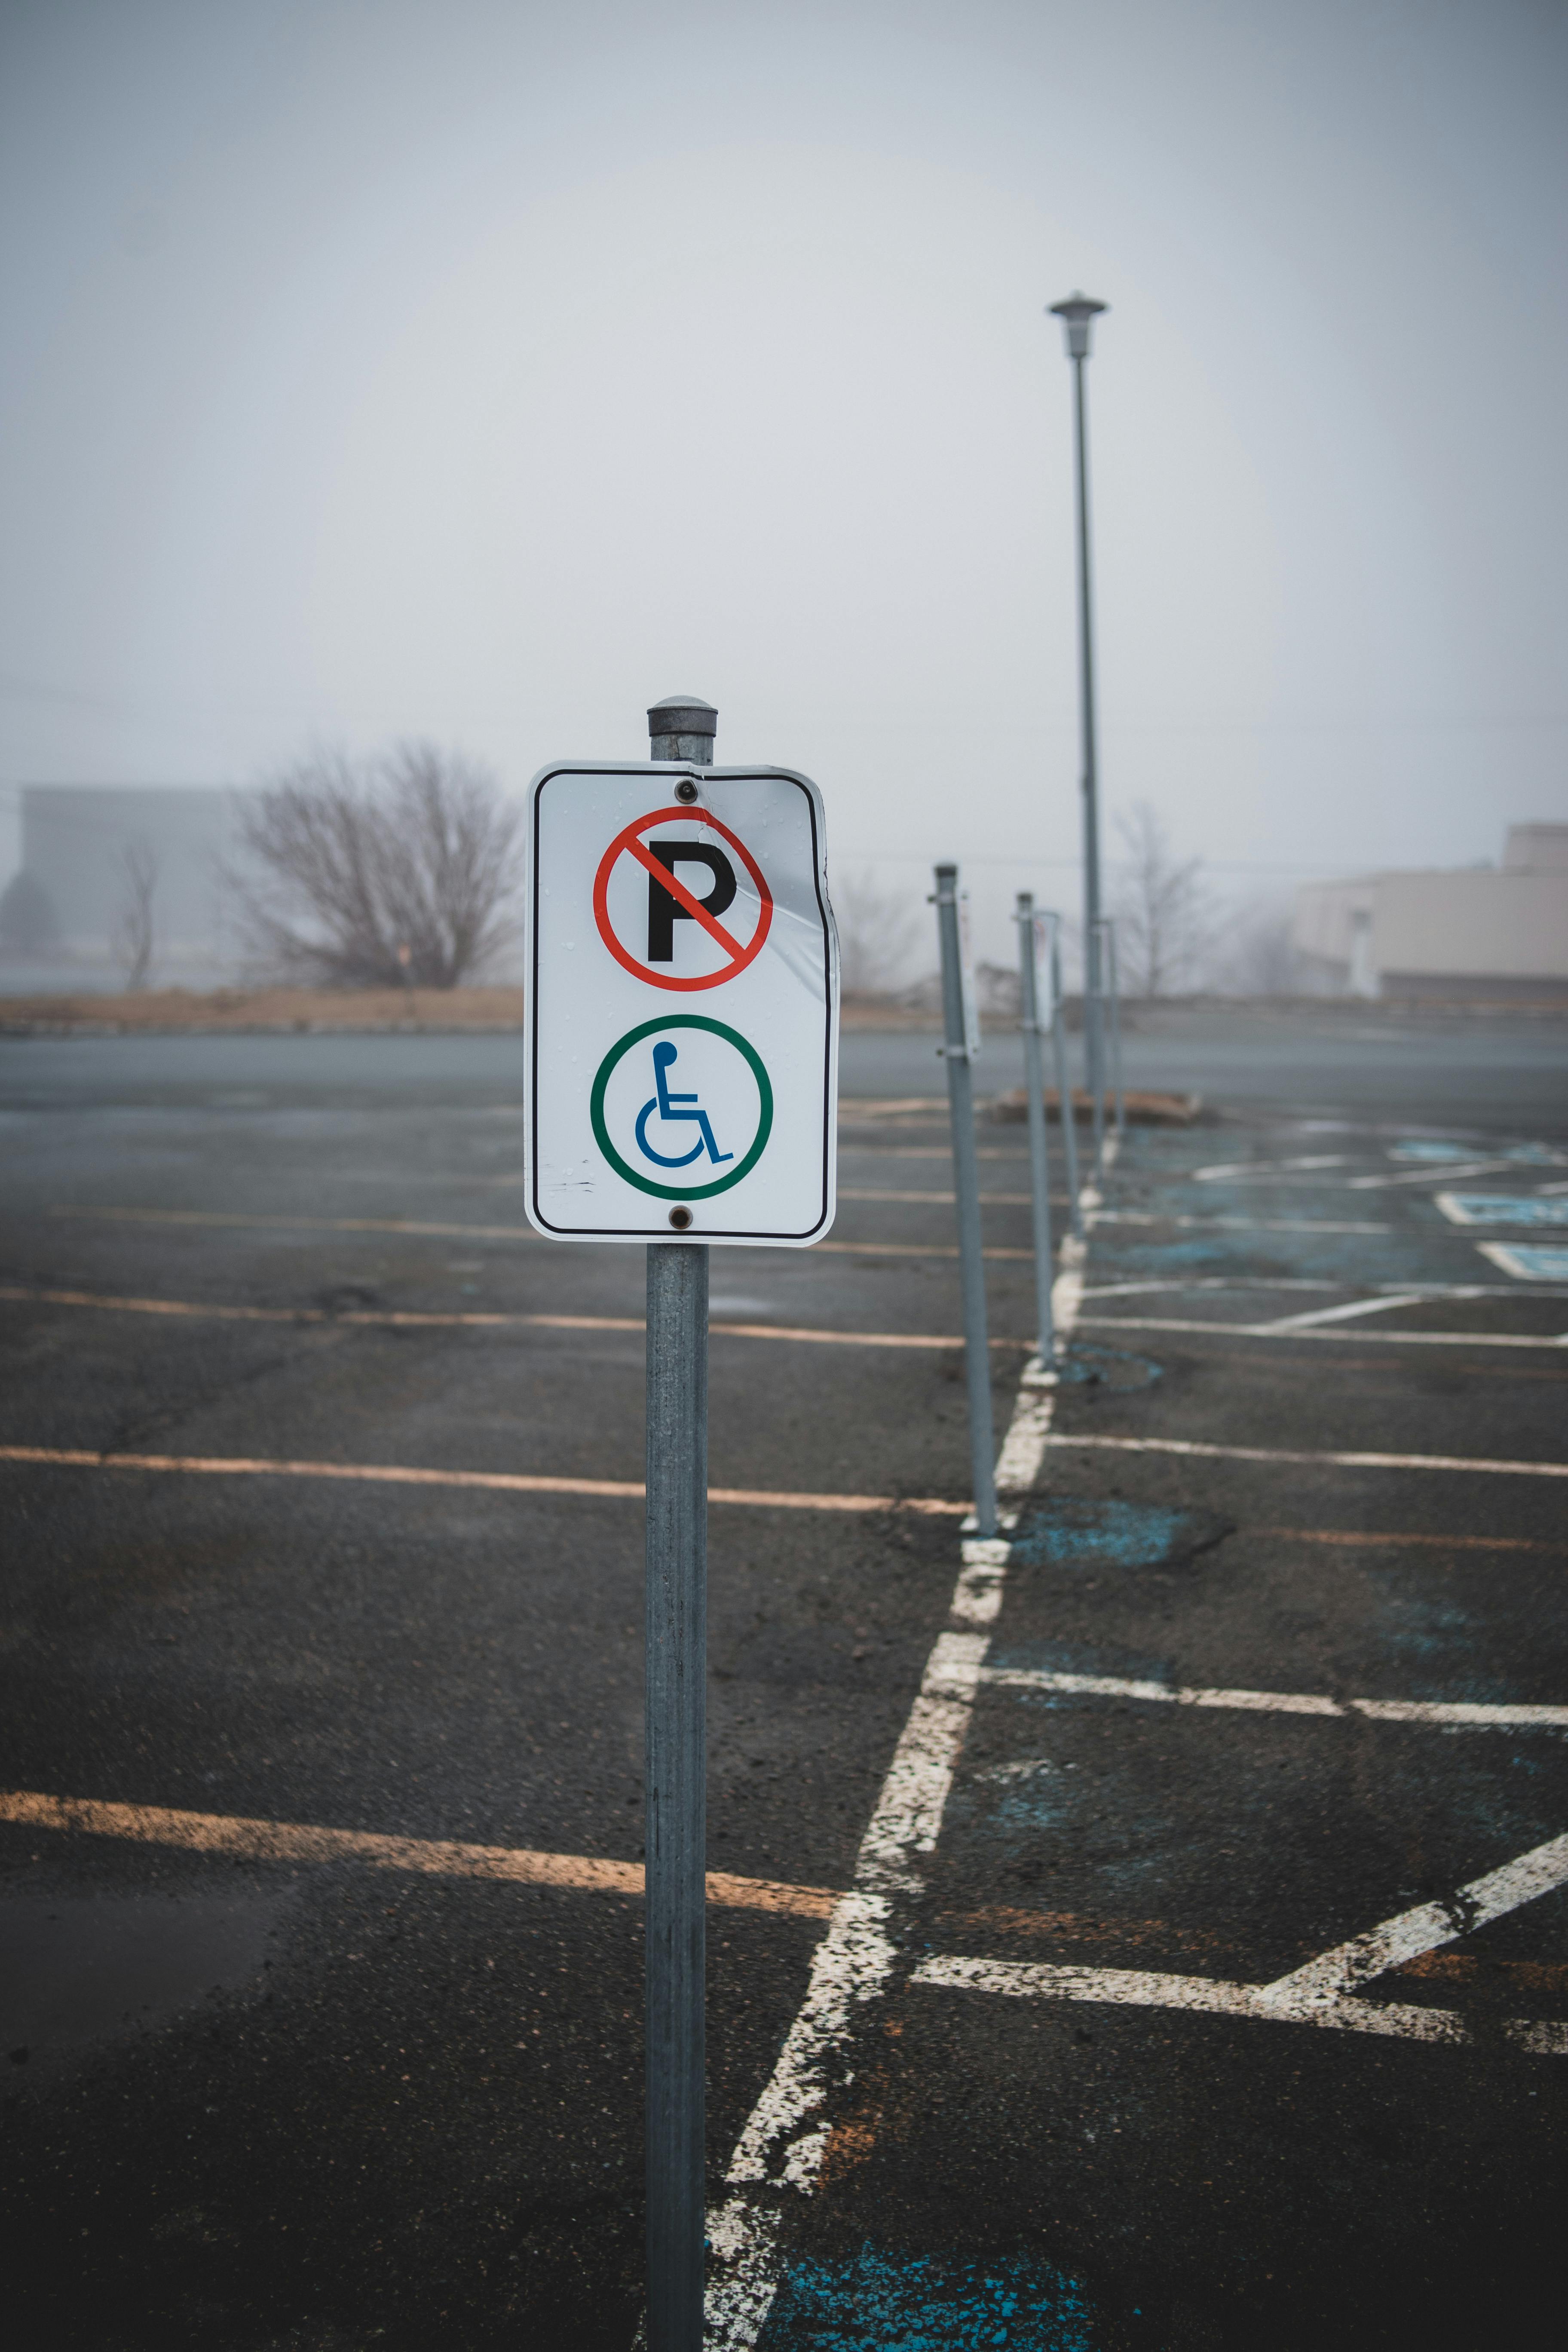 Billings Best Parking Spots are Empty [PICS]